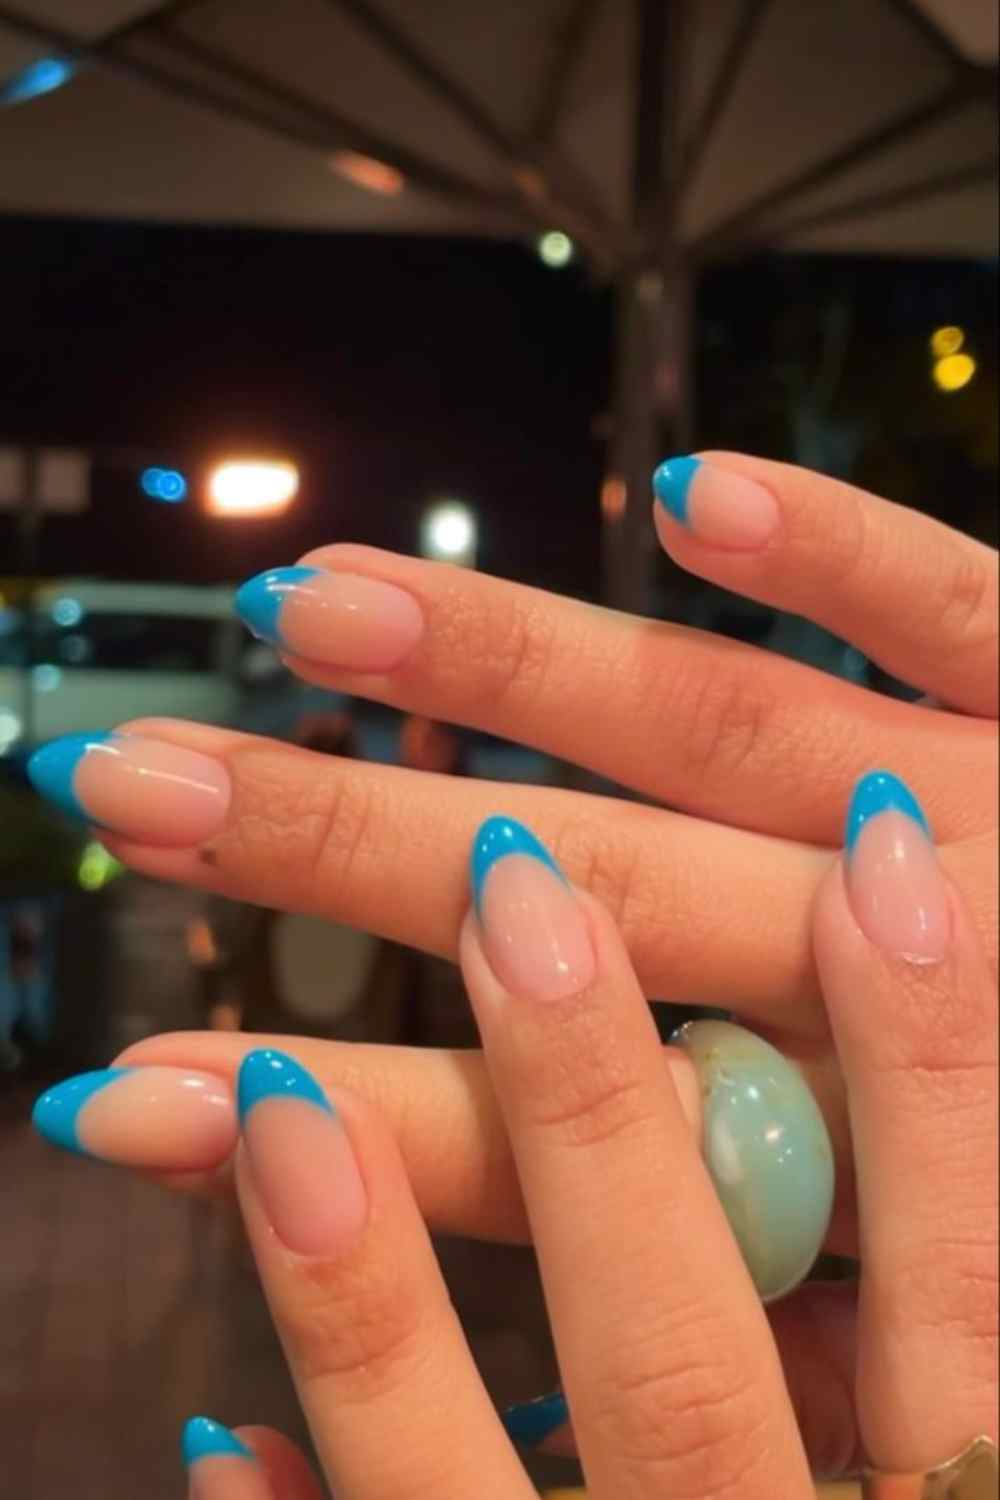 Blue tip nail art design done by a nail artist